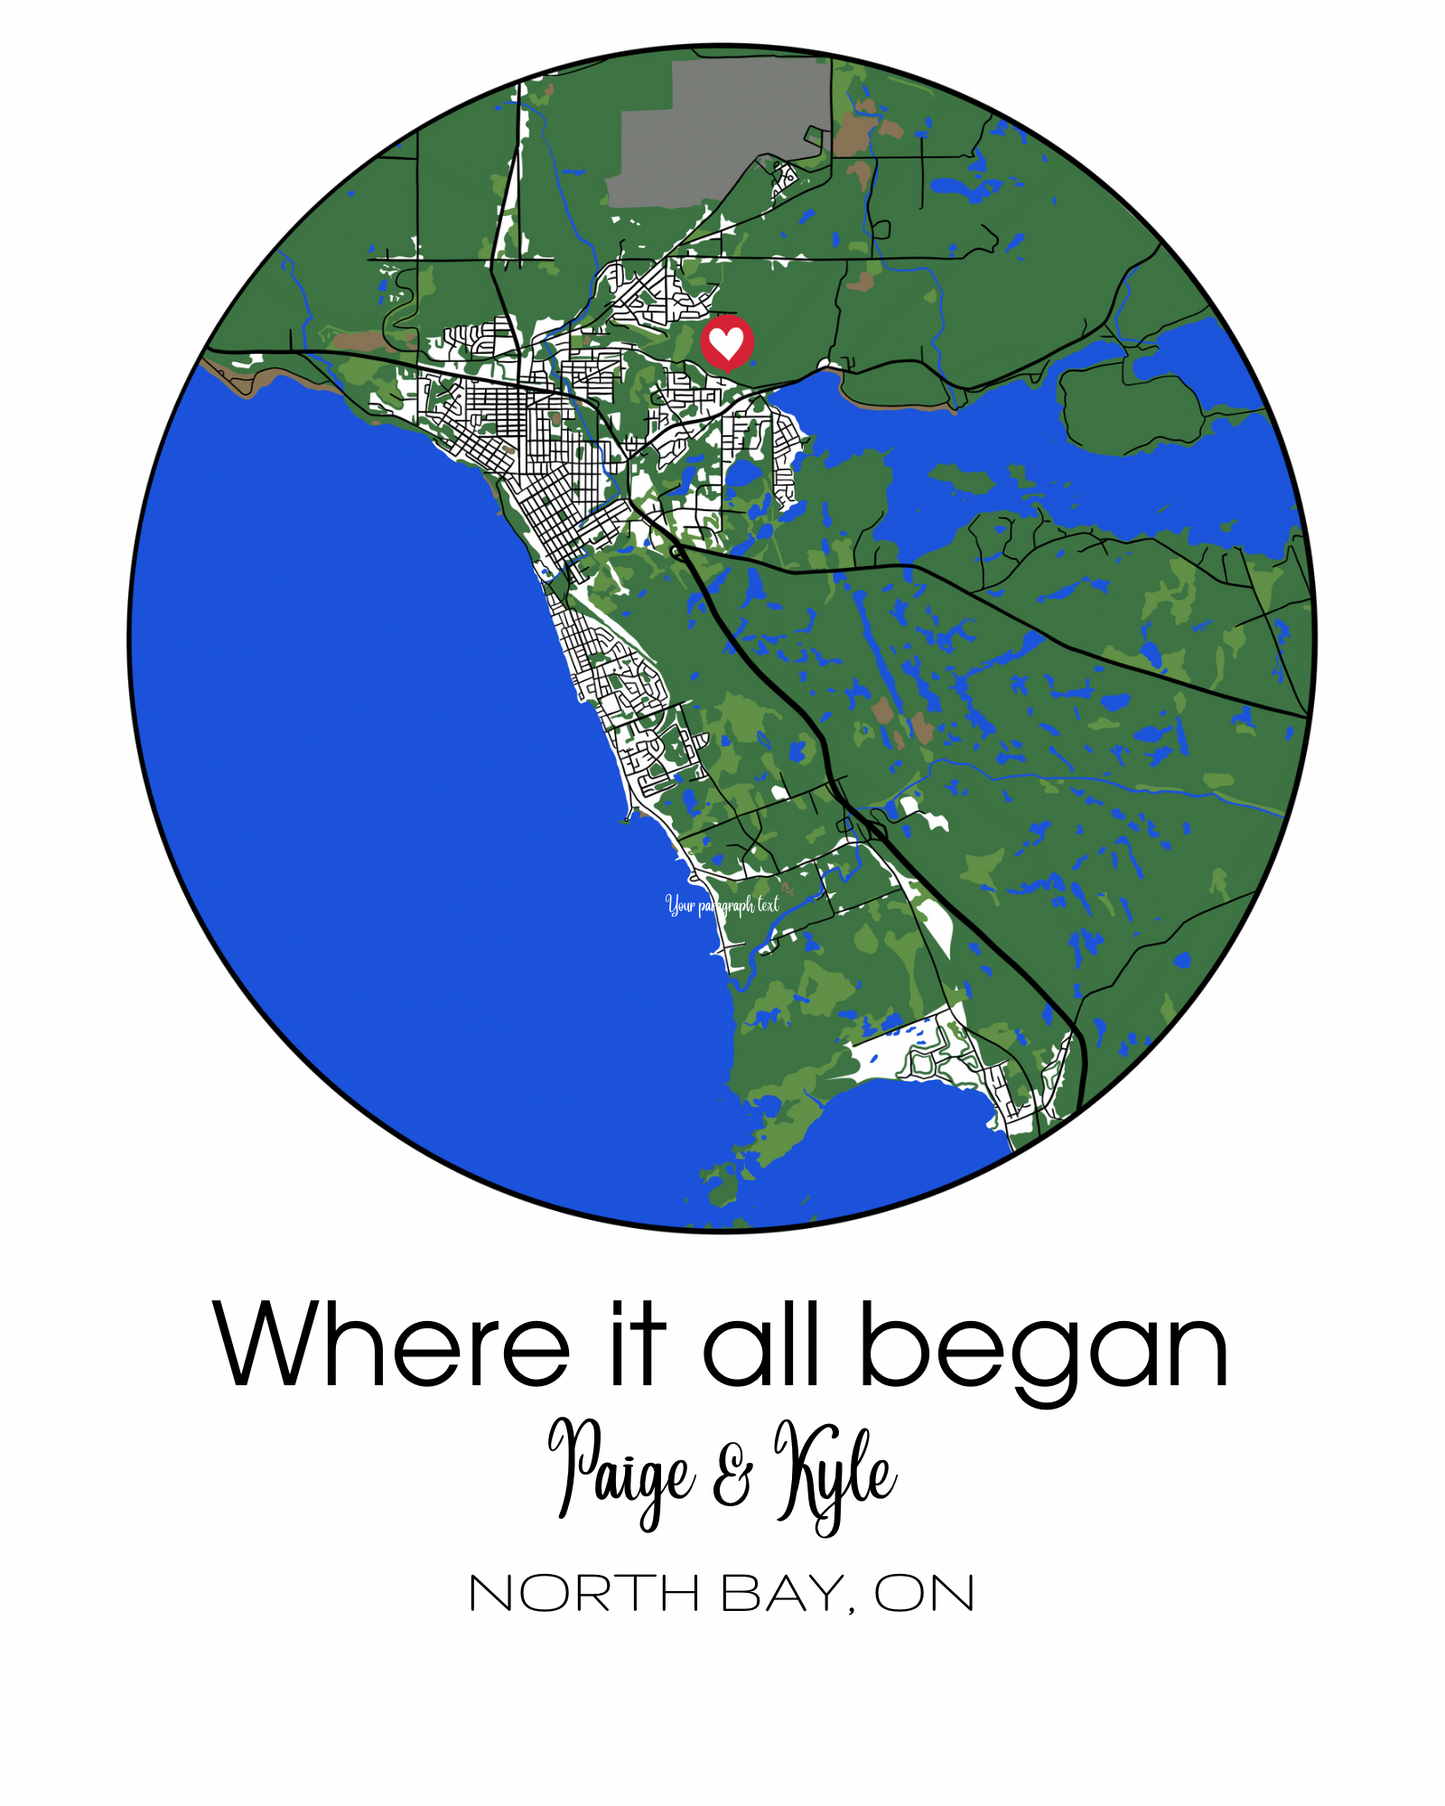 Where It All Began Map | Custom Digital Illustration